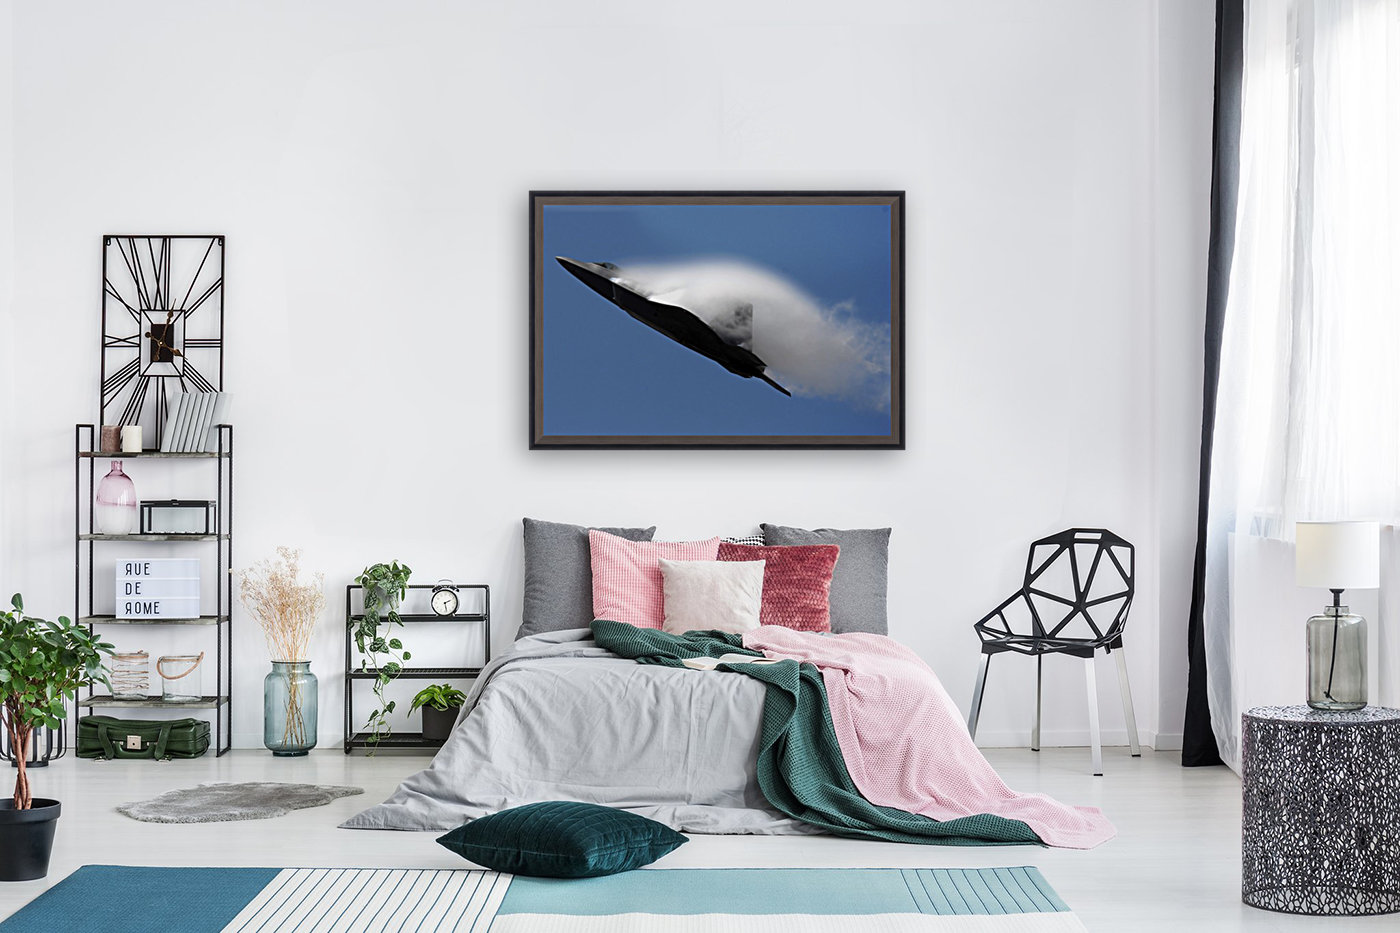 An F 22 Raptor Performs During An Air Show Stocktrekimages Canvas Artwork